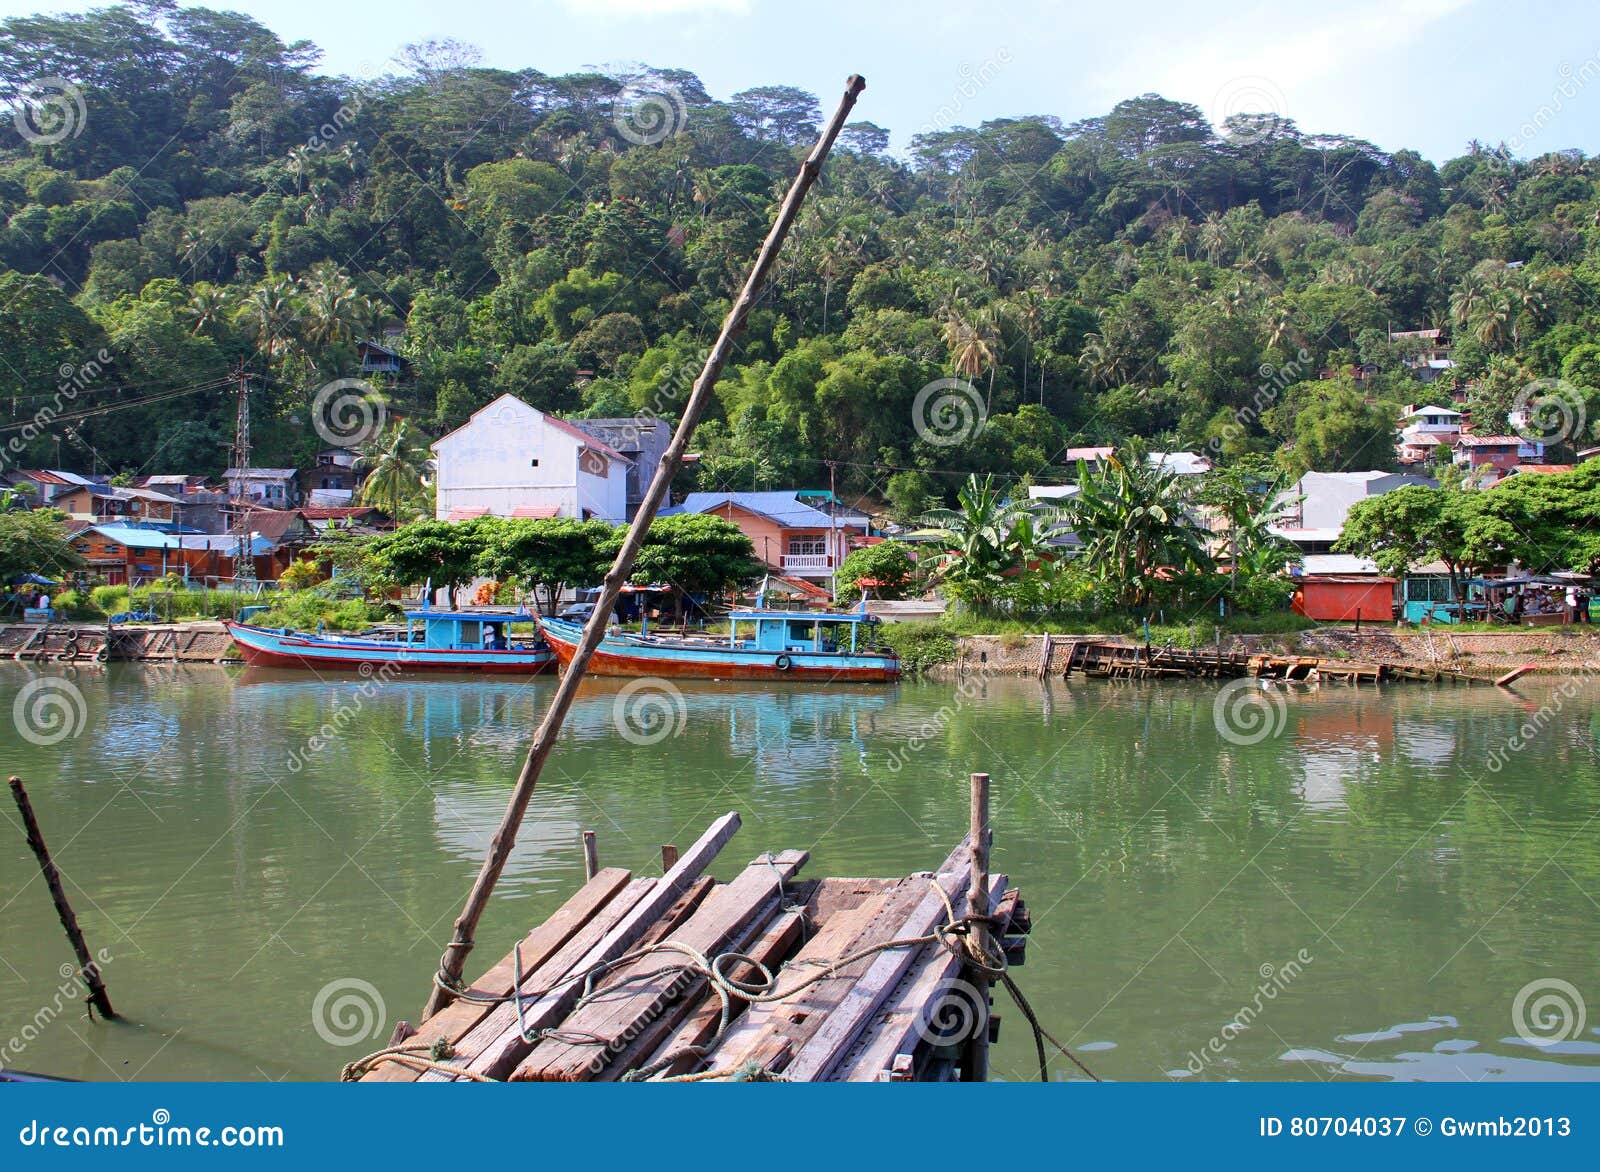 boats on the batang arau river in padang, west sumatra